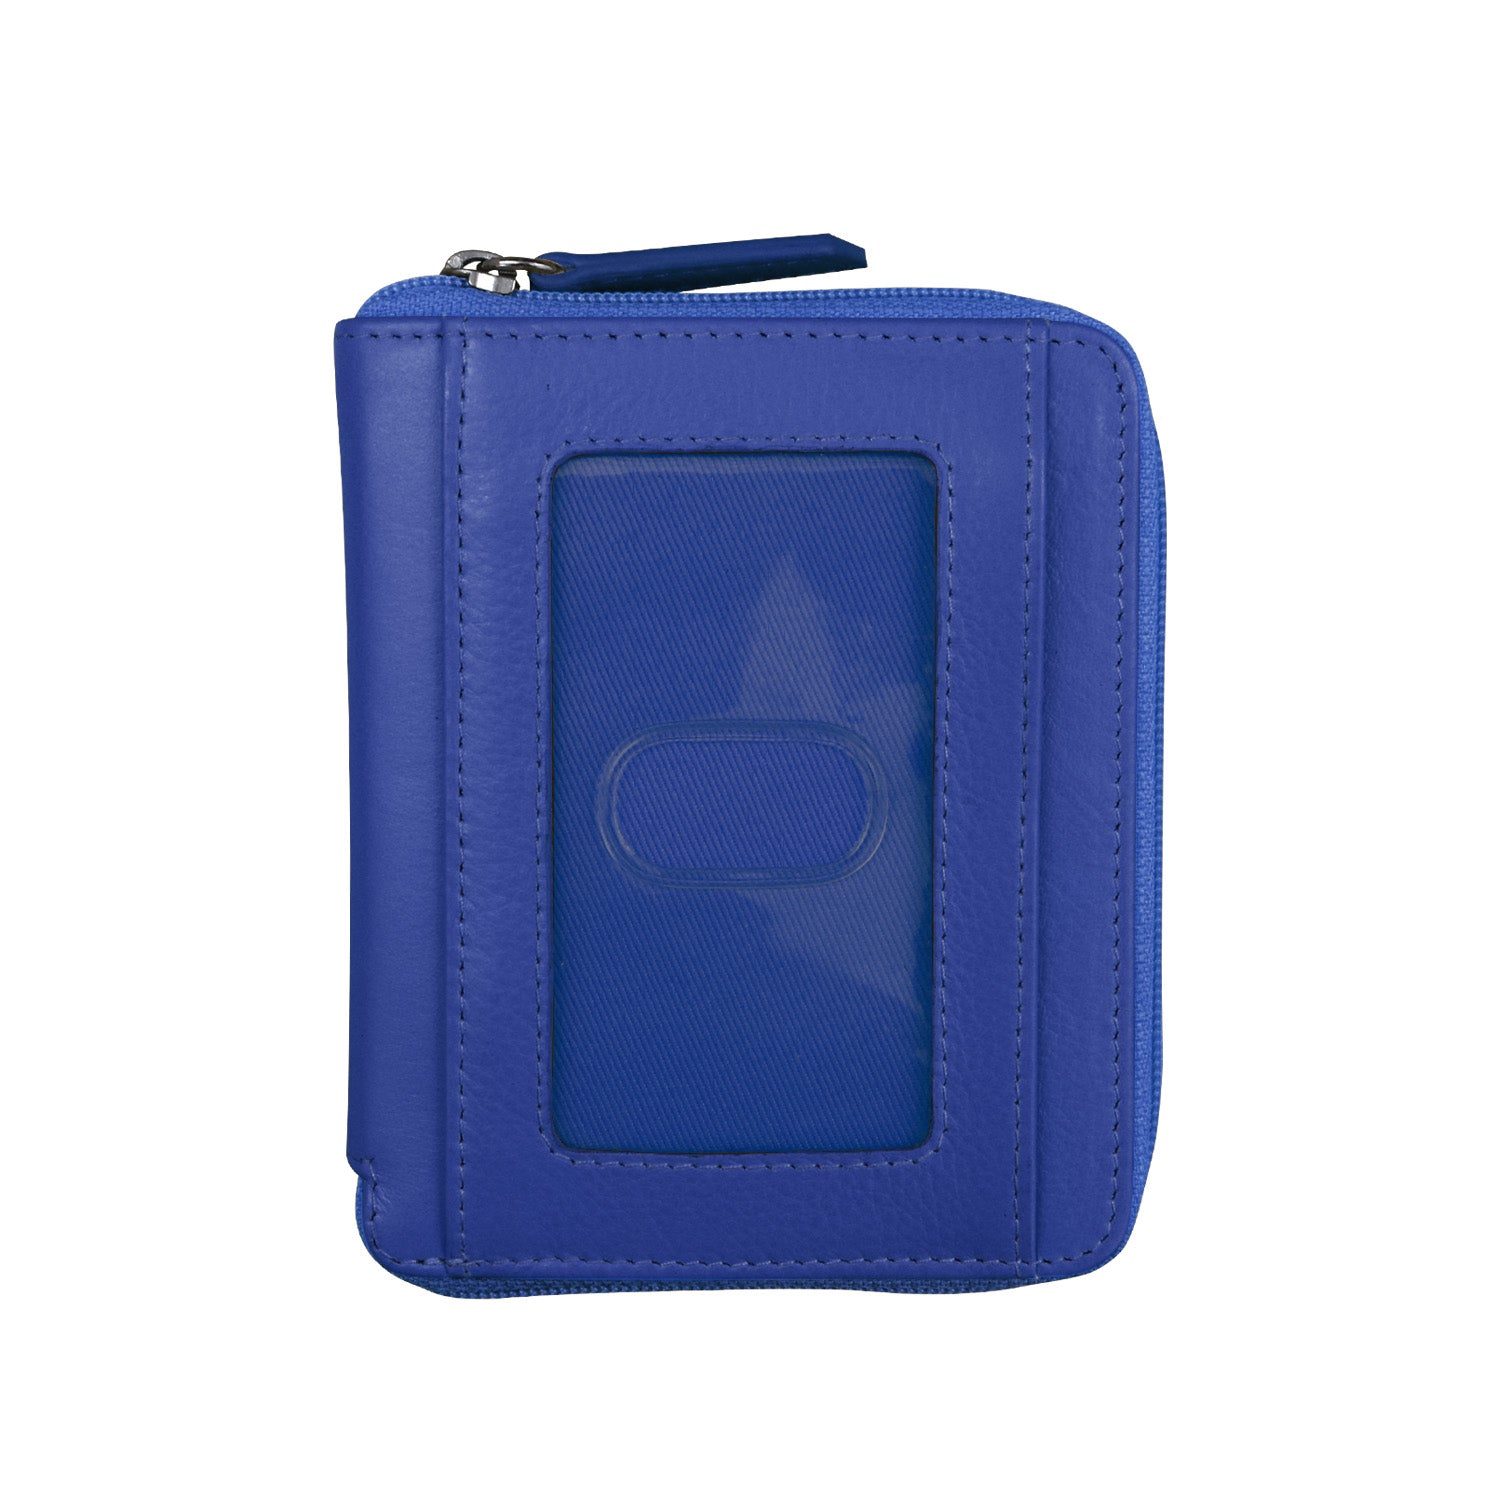 MOYNAT Round Zip PVC Leather Wallet Navy Blue H11cm W9.5cm D1.5cm with Box